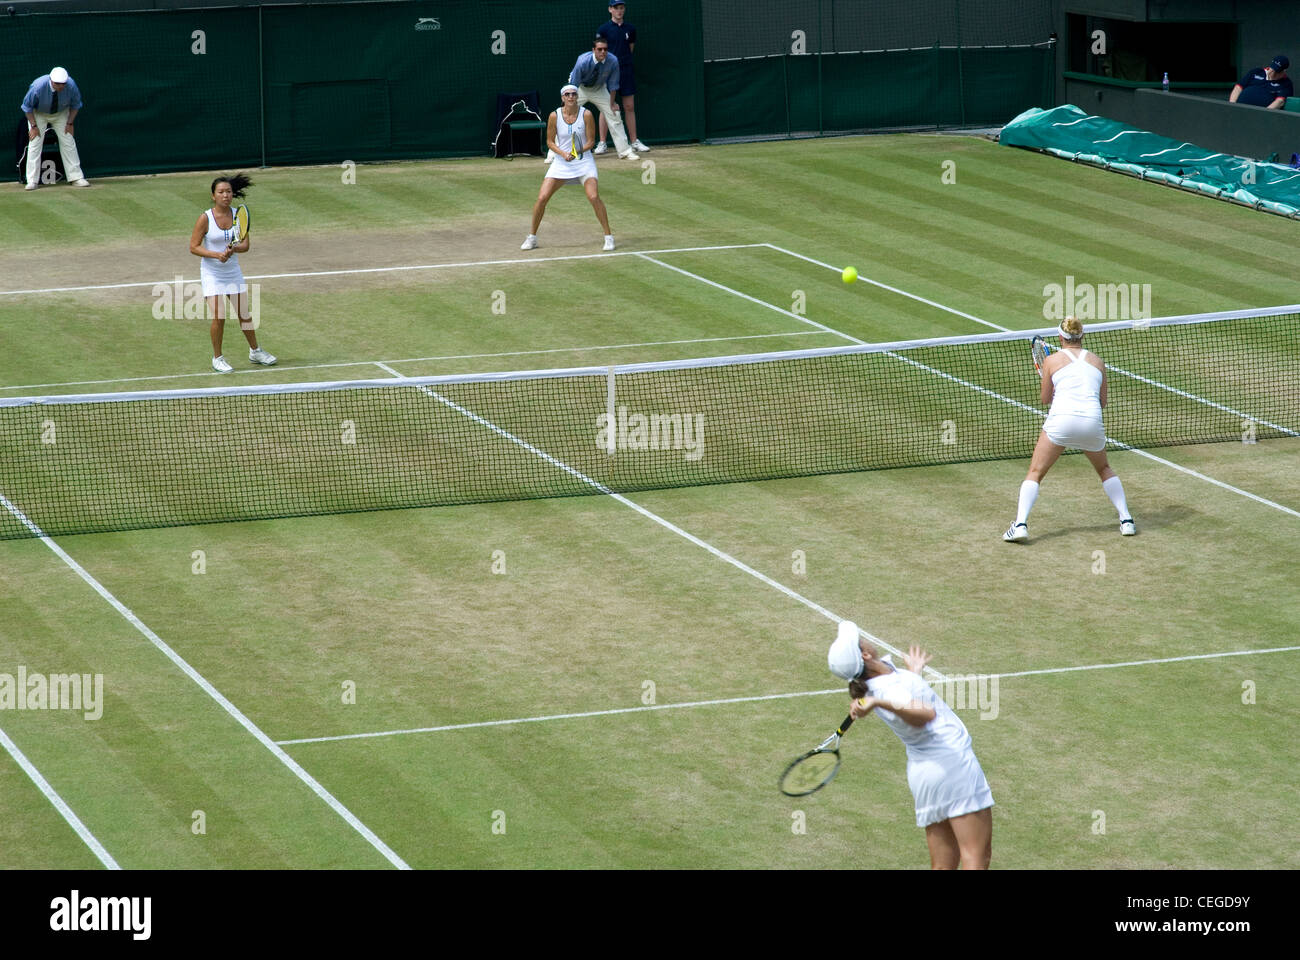 Les championnats de tennis de Wimbledon Banque D'Images